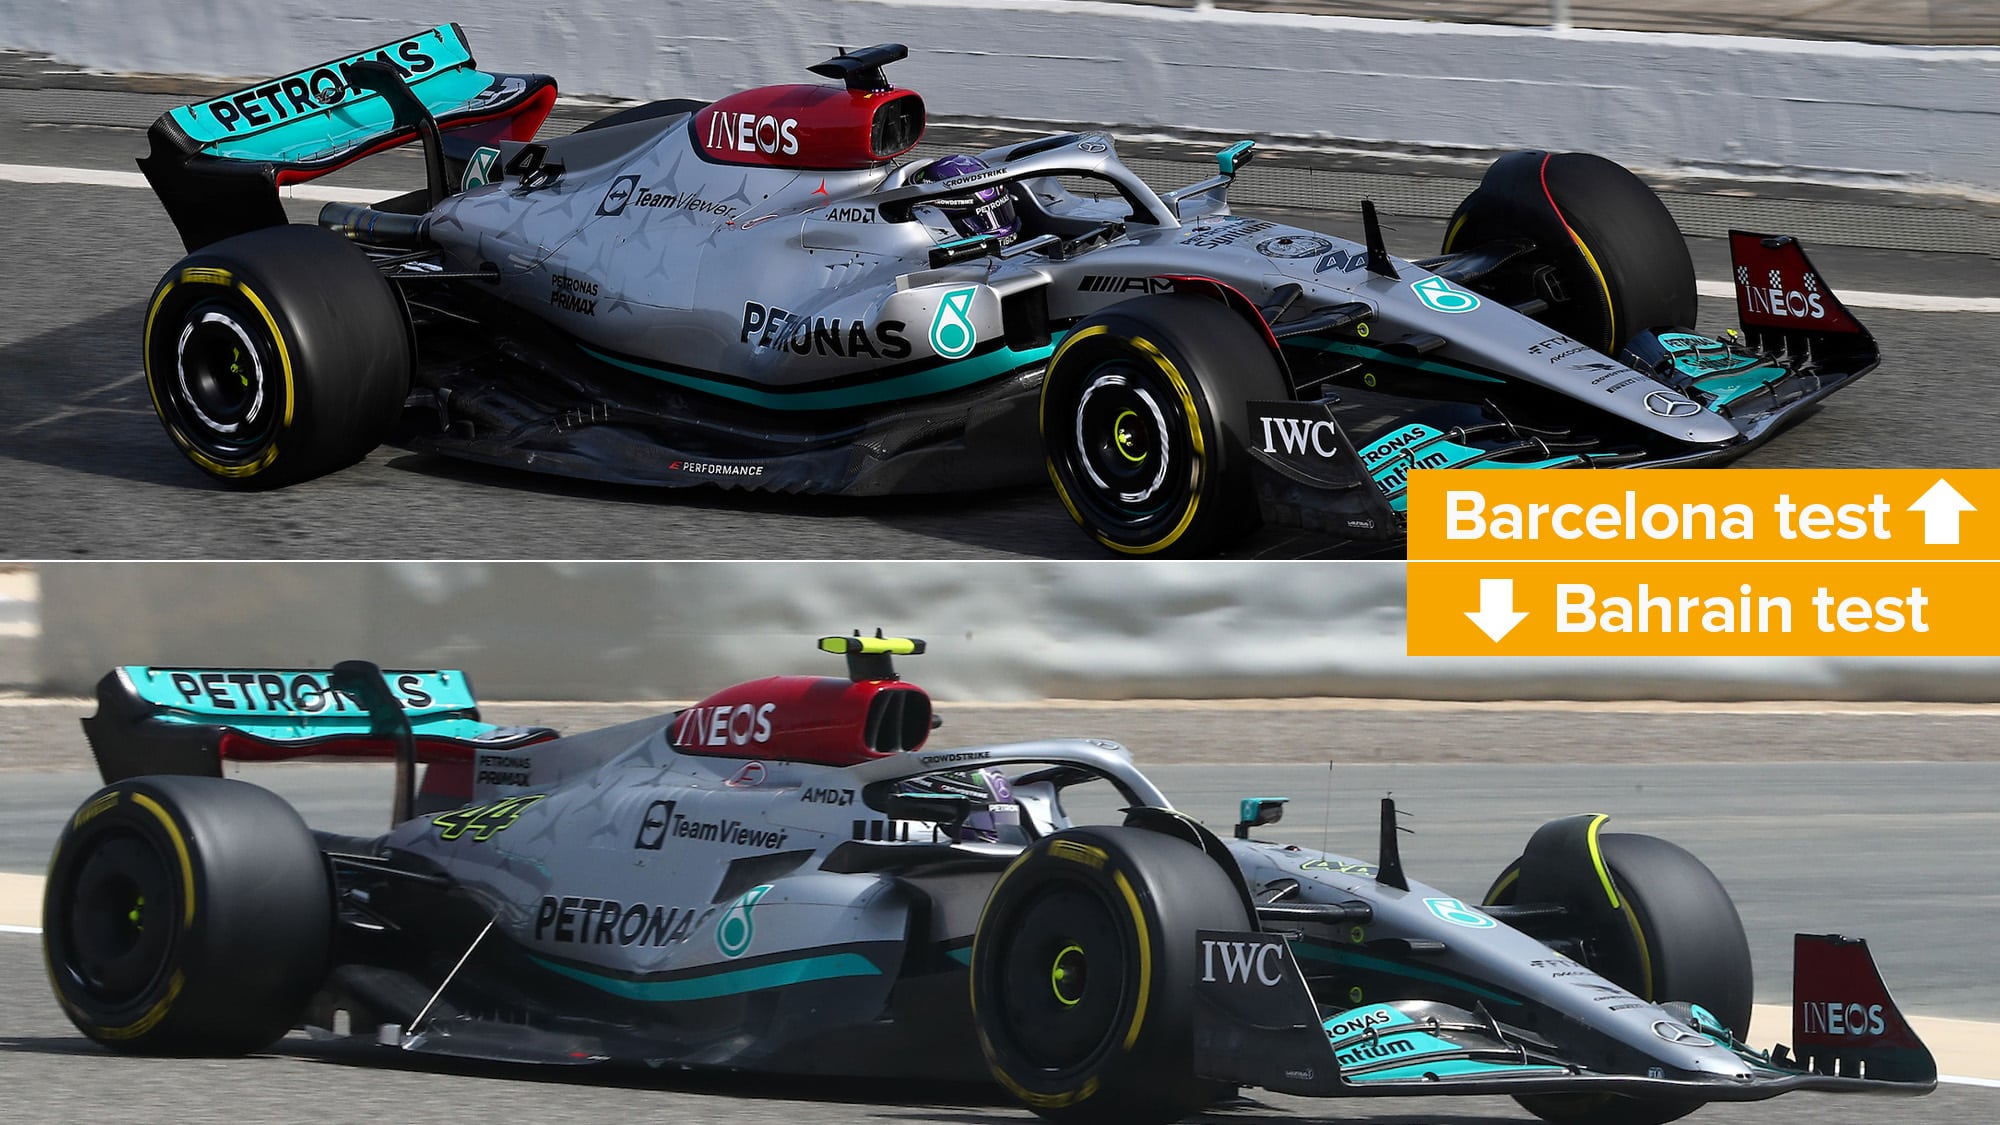 Mercedes Barcelona Bahrain comparison